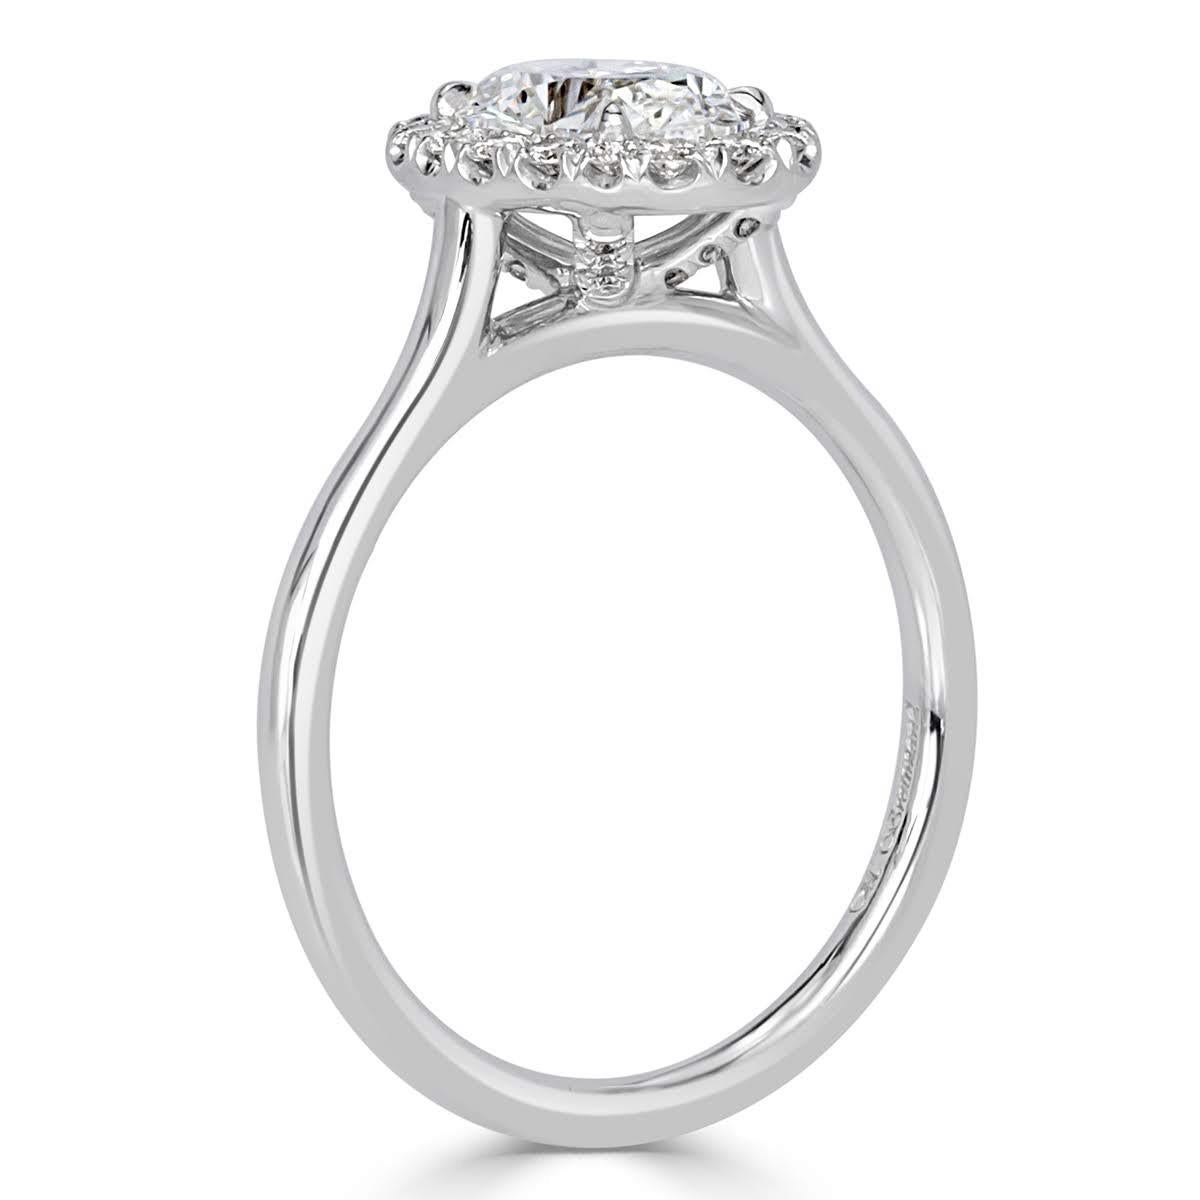 Women's or Men's Mark Broumand 1.48 Carat Oval Cut Diamond Engagement Ring